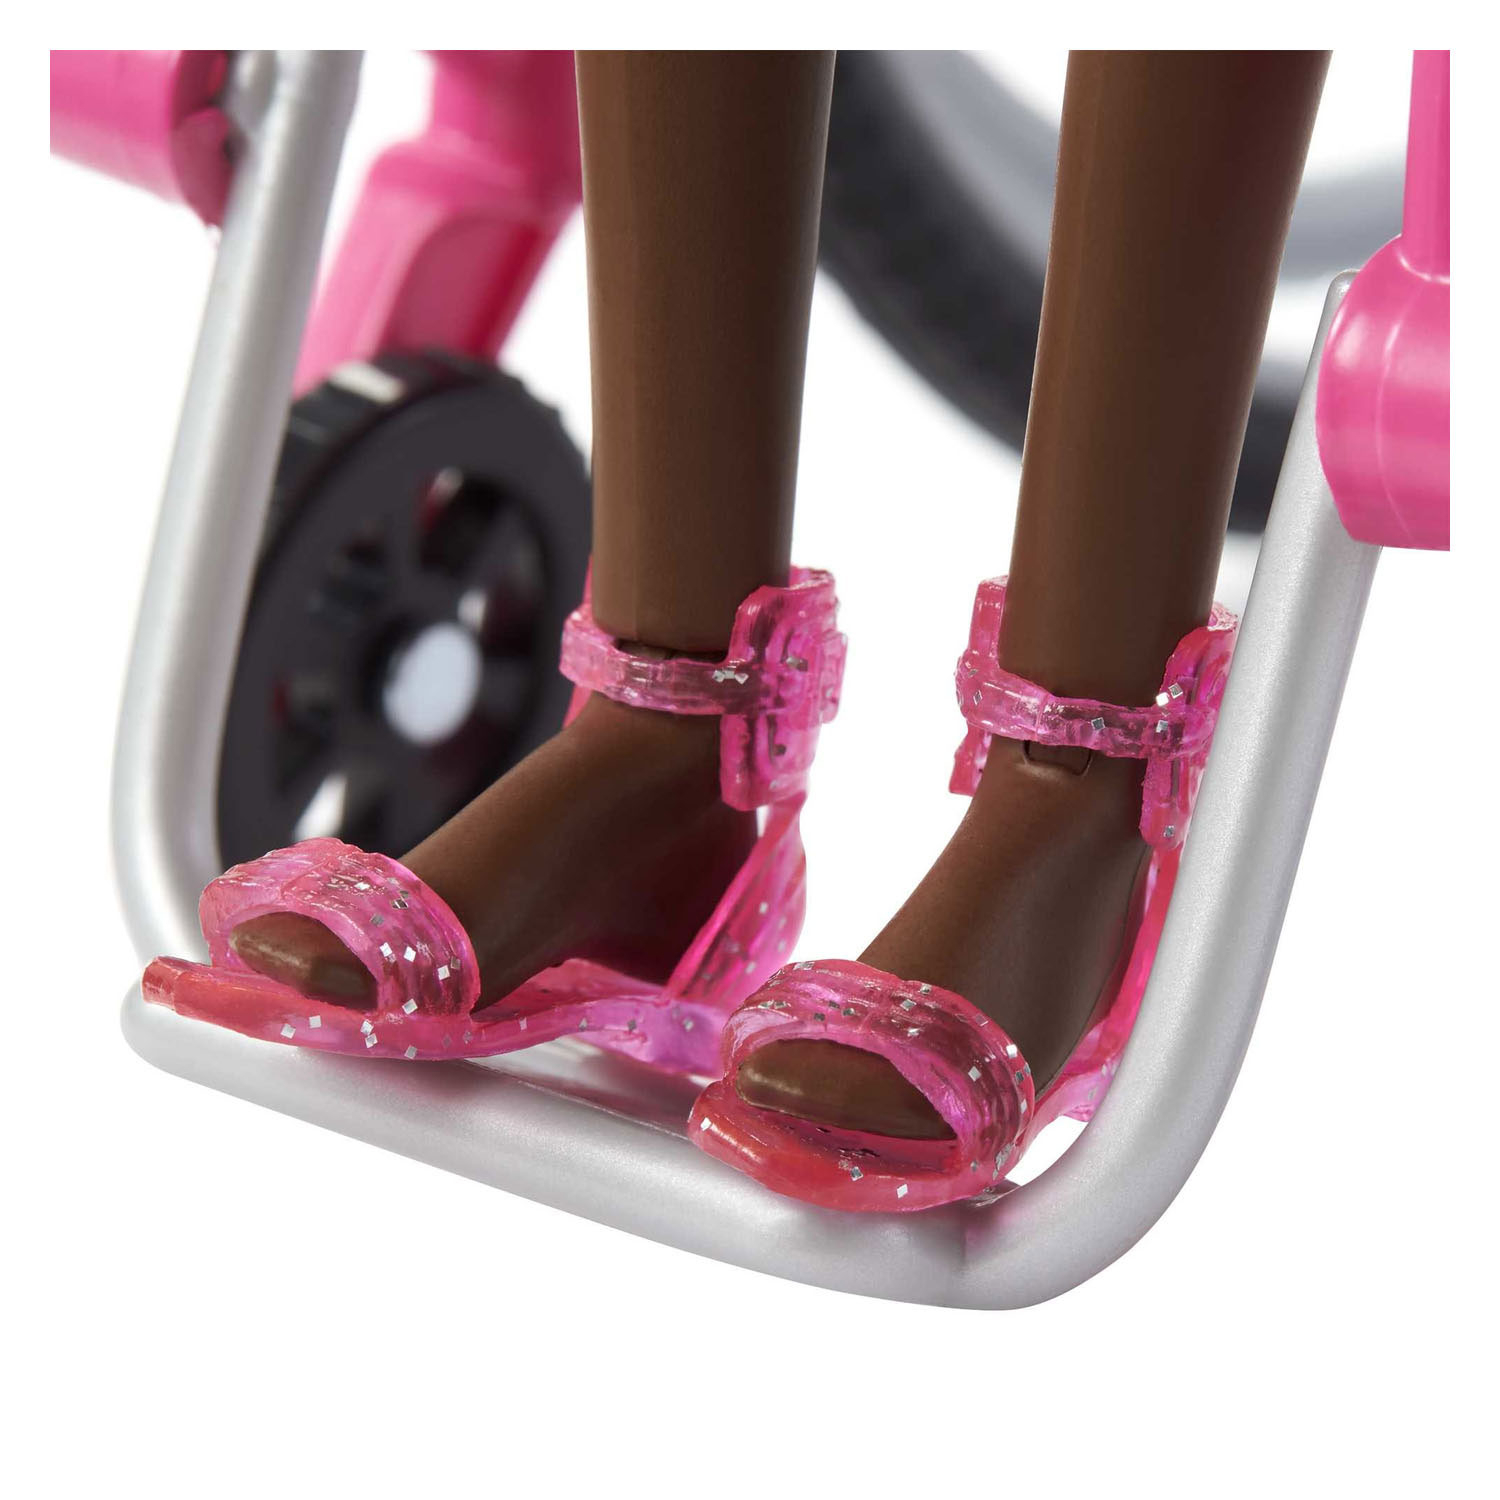 Barbie Fashionistas Modepuppe im Rollstuhl